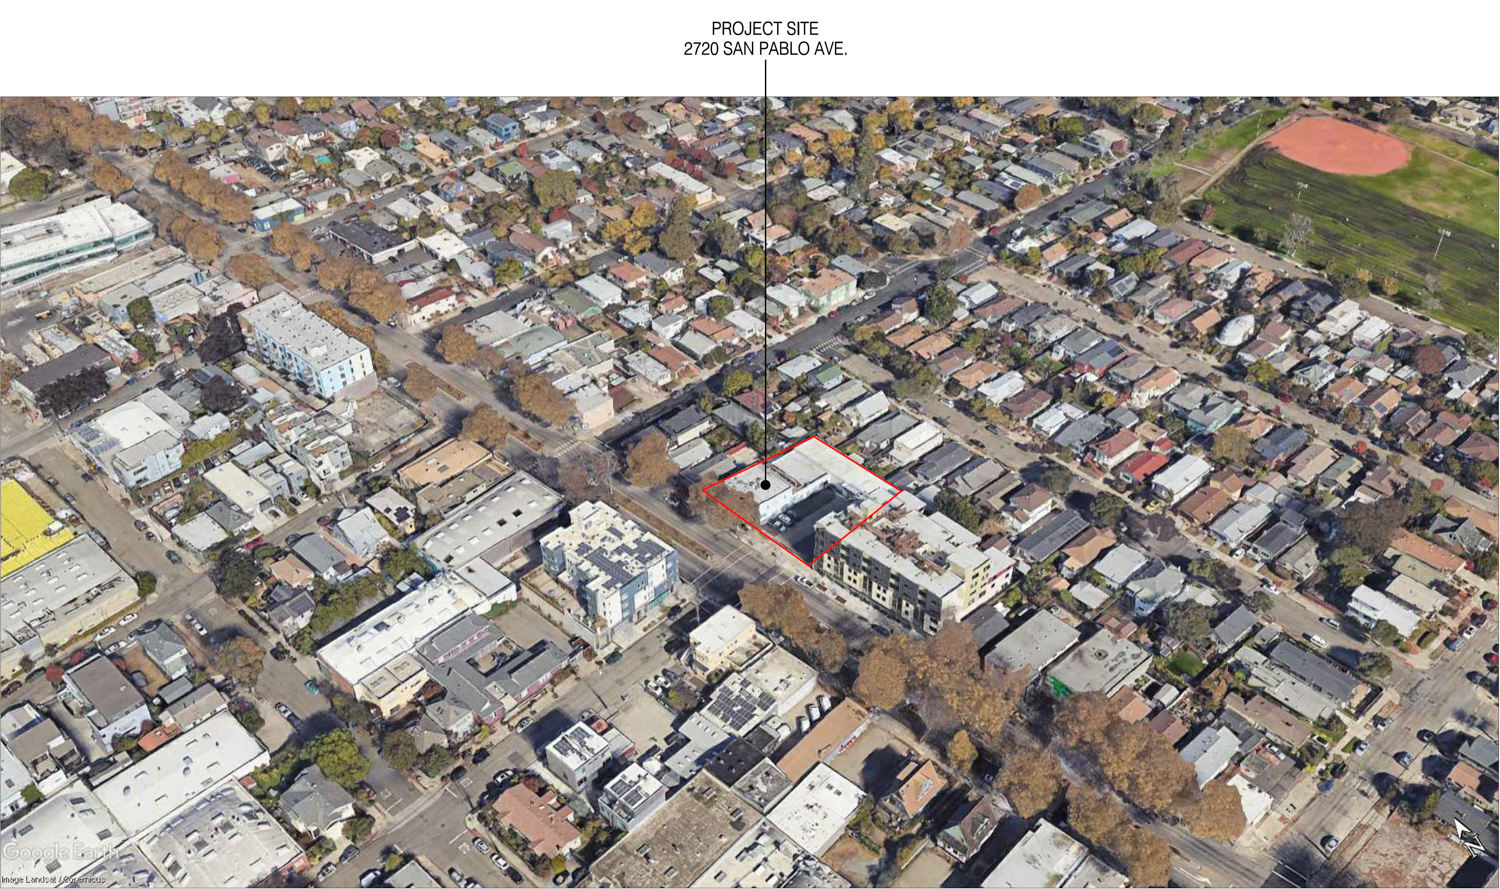 2733 San Pablo Avenue site outlined, image courtesy Trachtenberg Architects